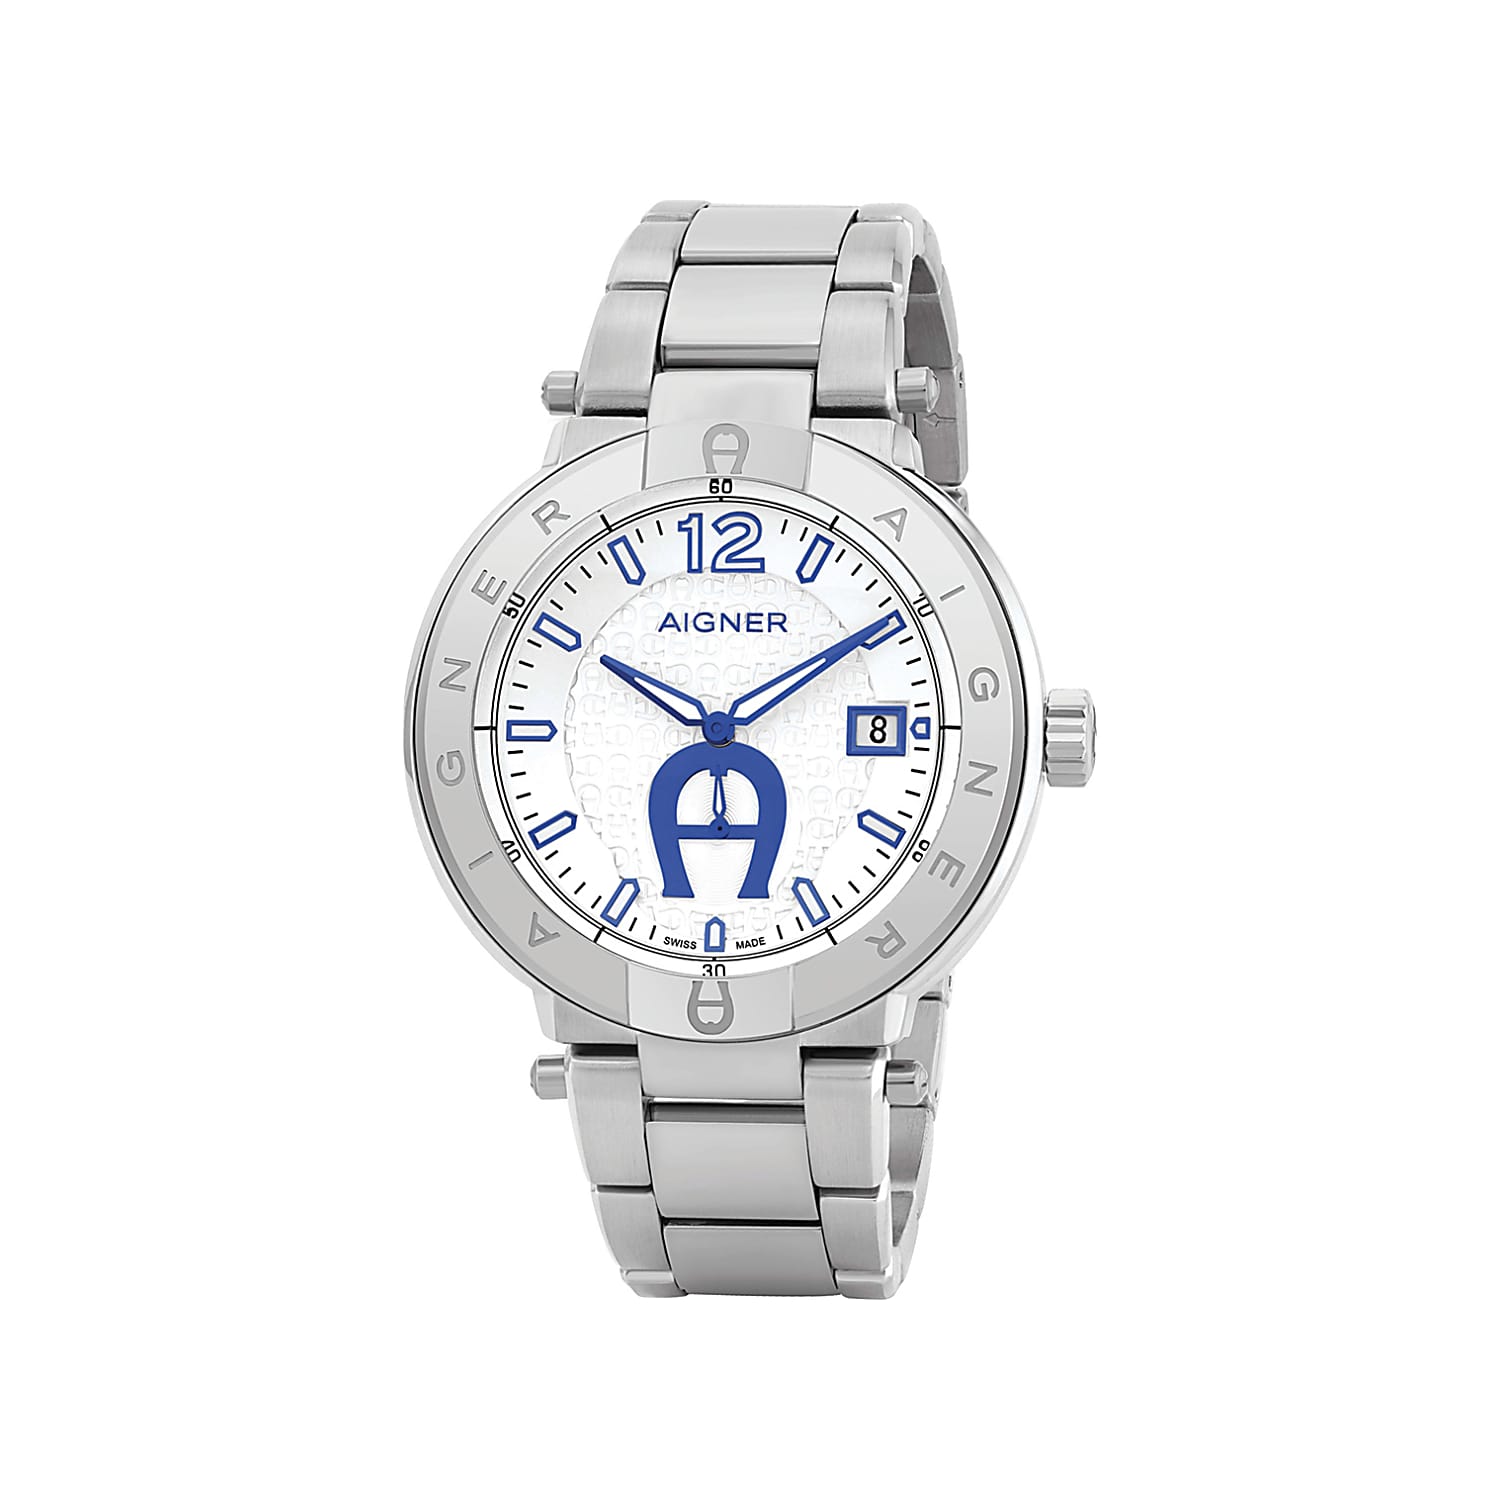 Gentlemen's Watch Monza Silver-Blue